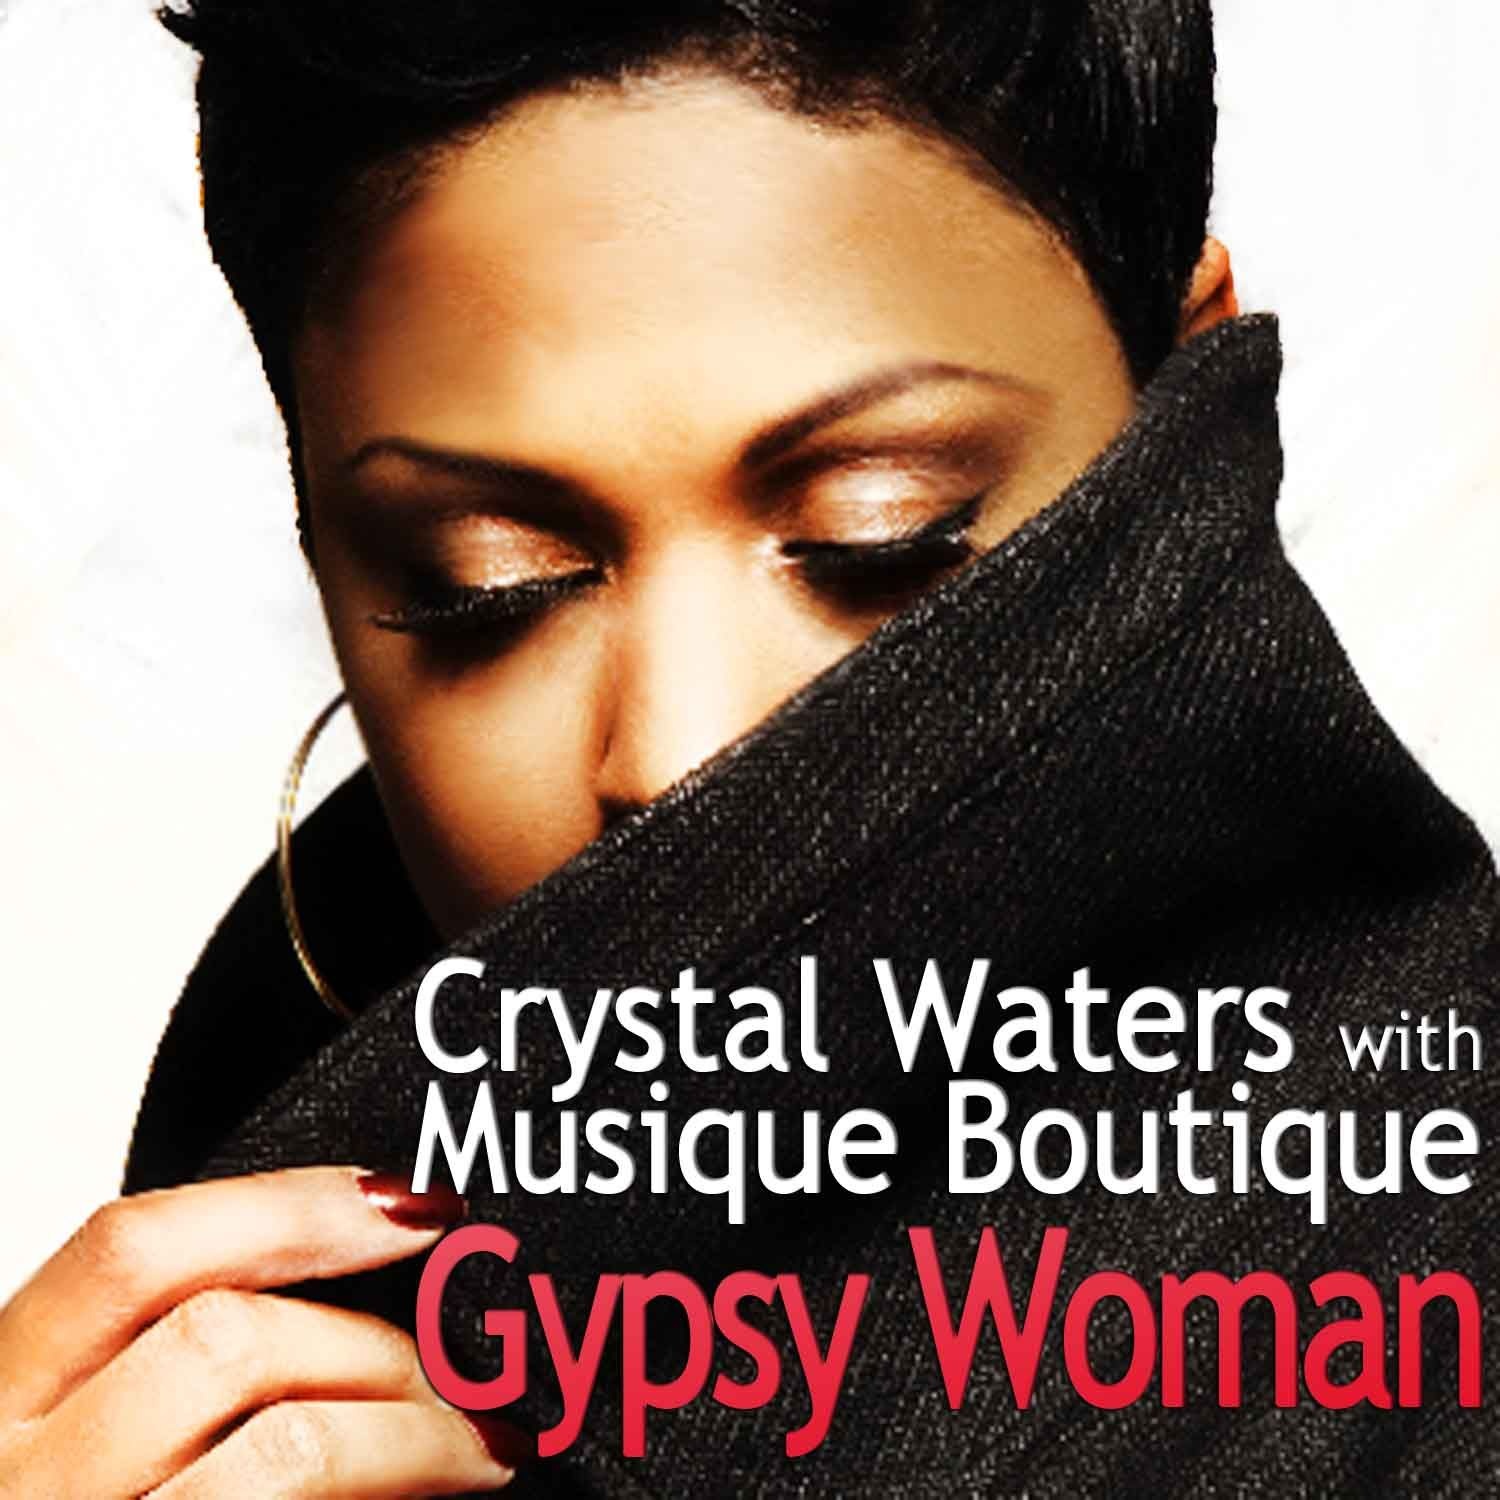 Gypsy Woman (Latin Version)